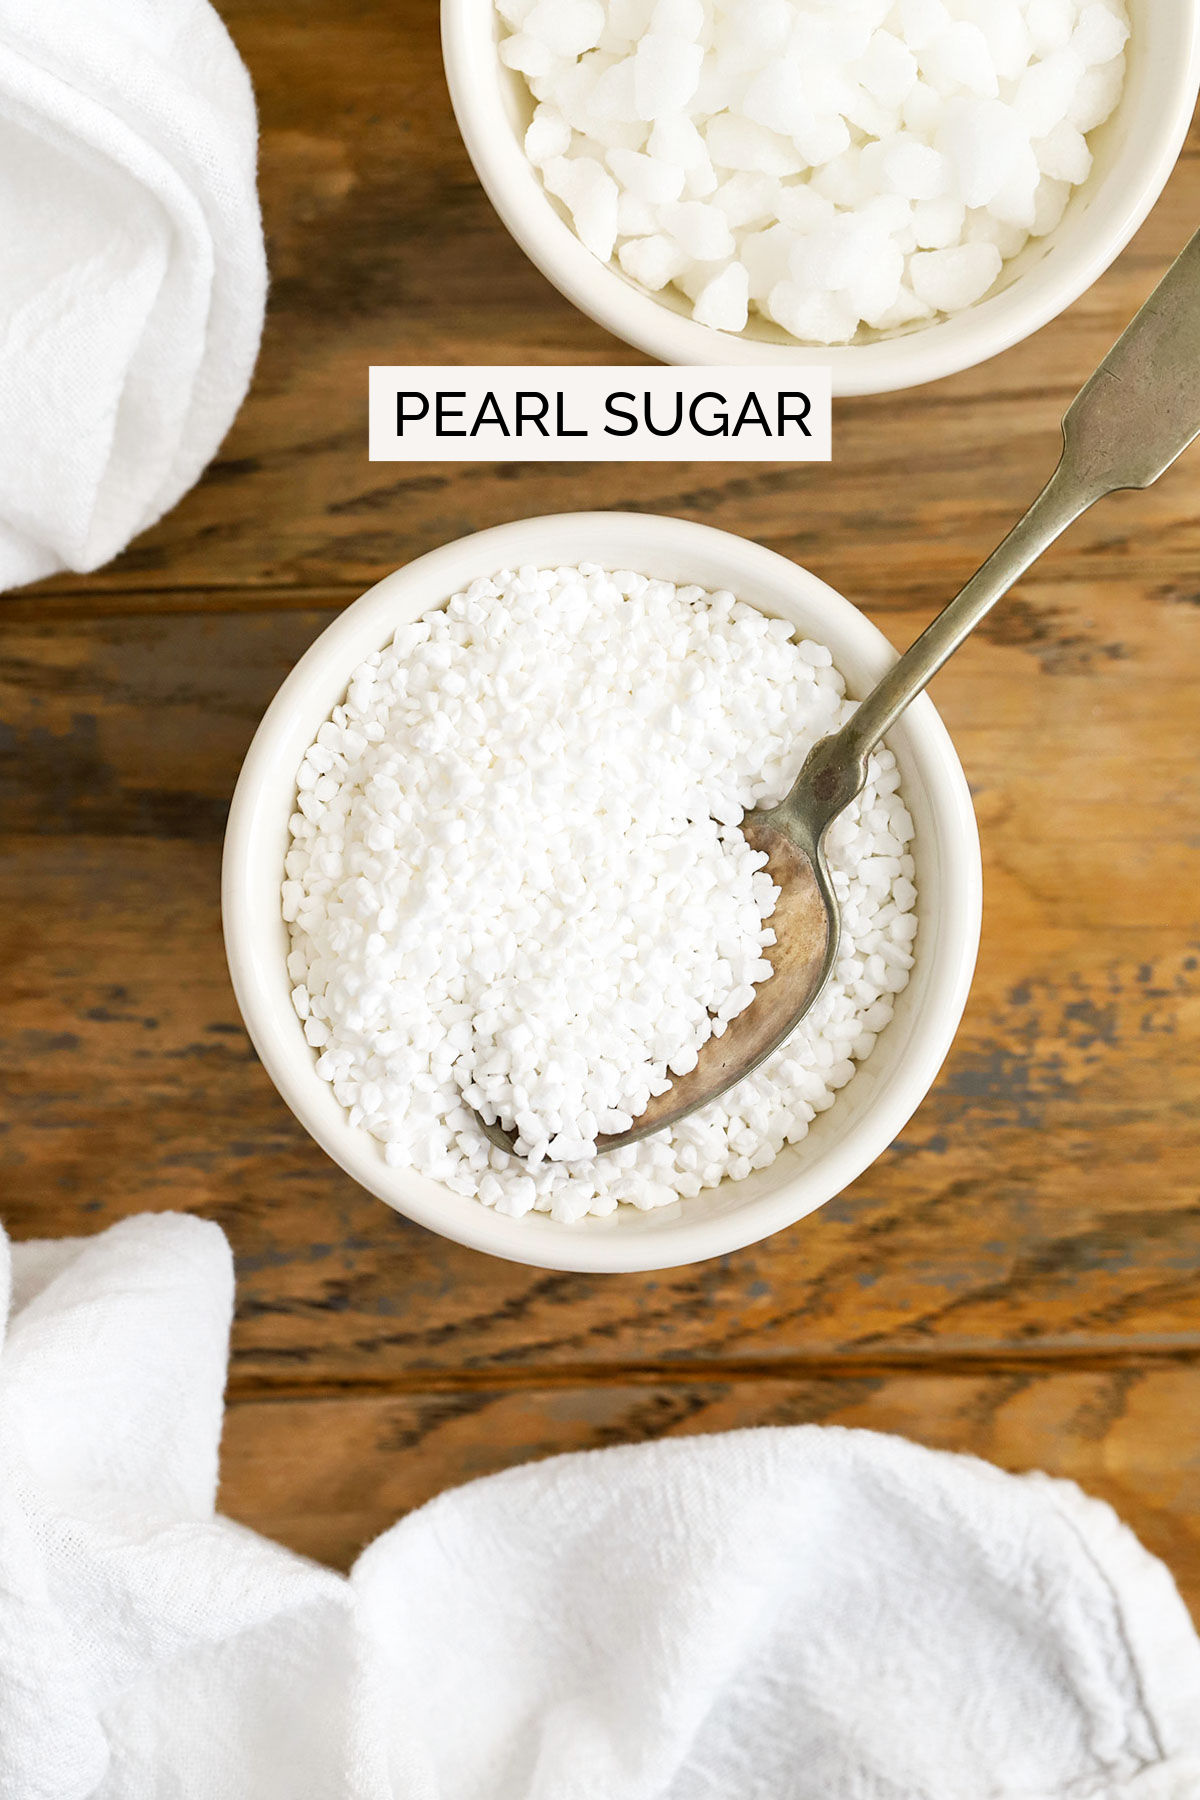 pearl sugar in a white bowl